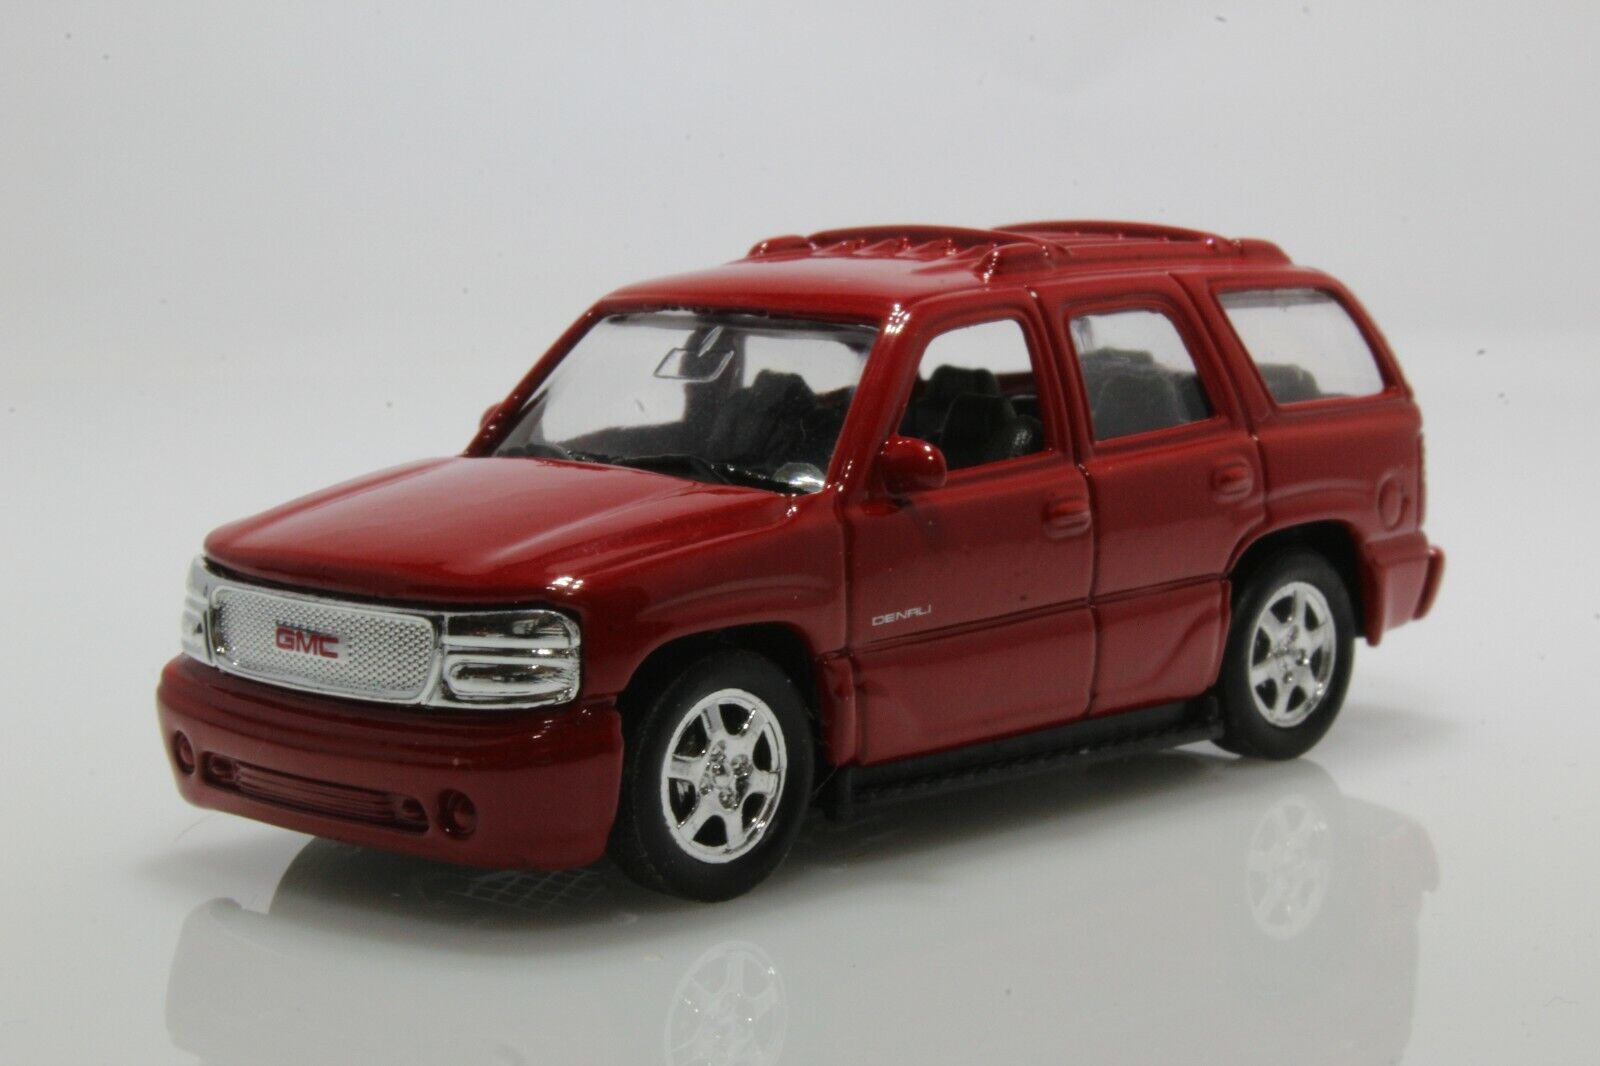 2001 GMC Yukon Denali SUV (Tahoe), 1:64 Scale Diecast Model (Red)